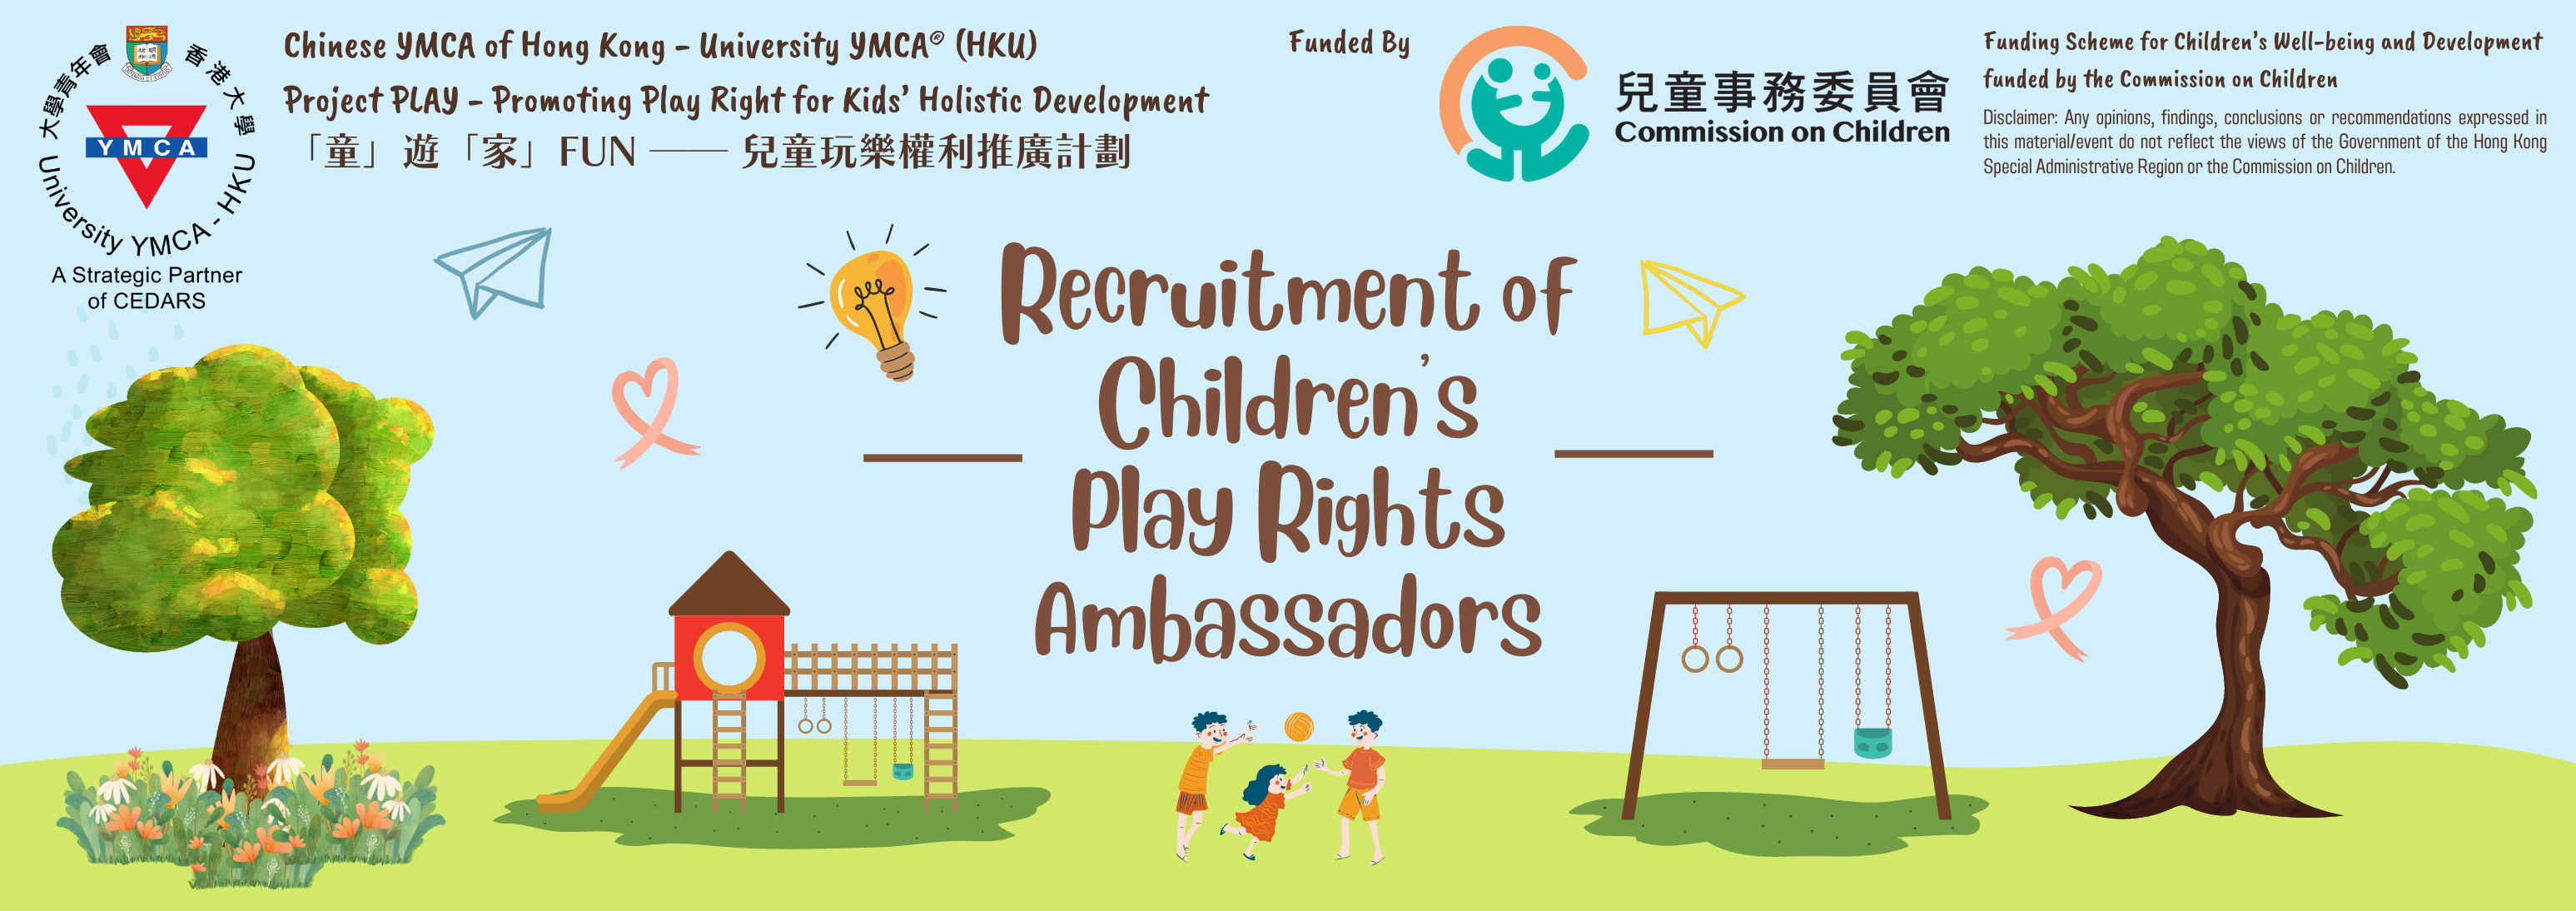 Recruitment of Children's Play Rights Ambassadors